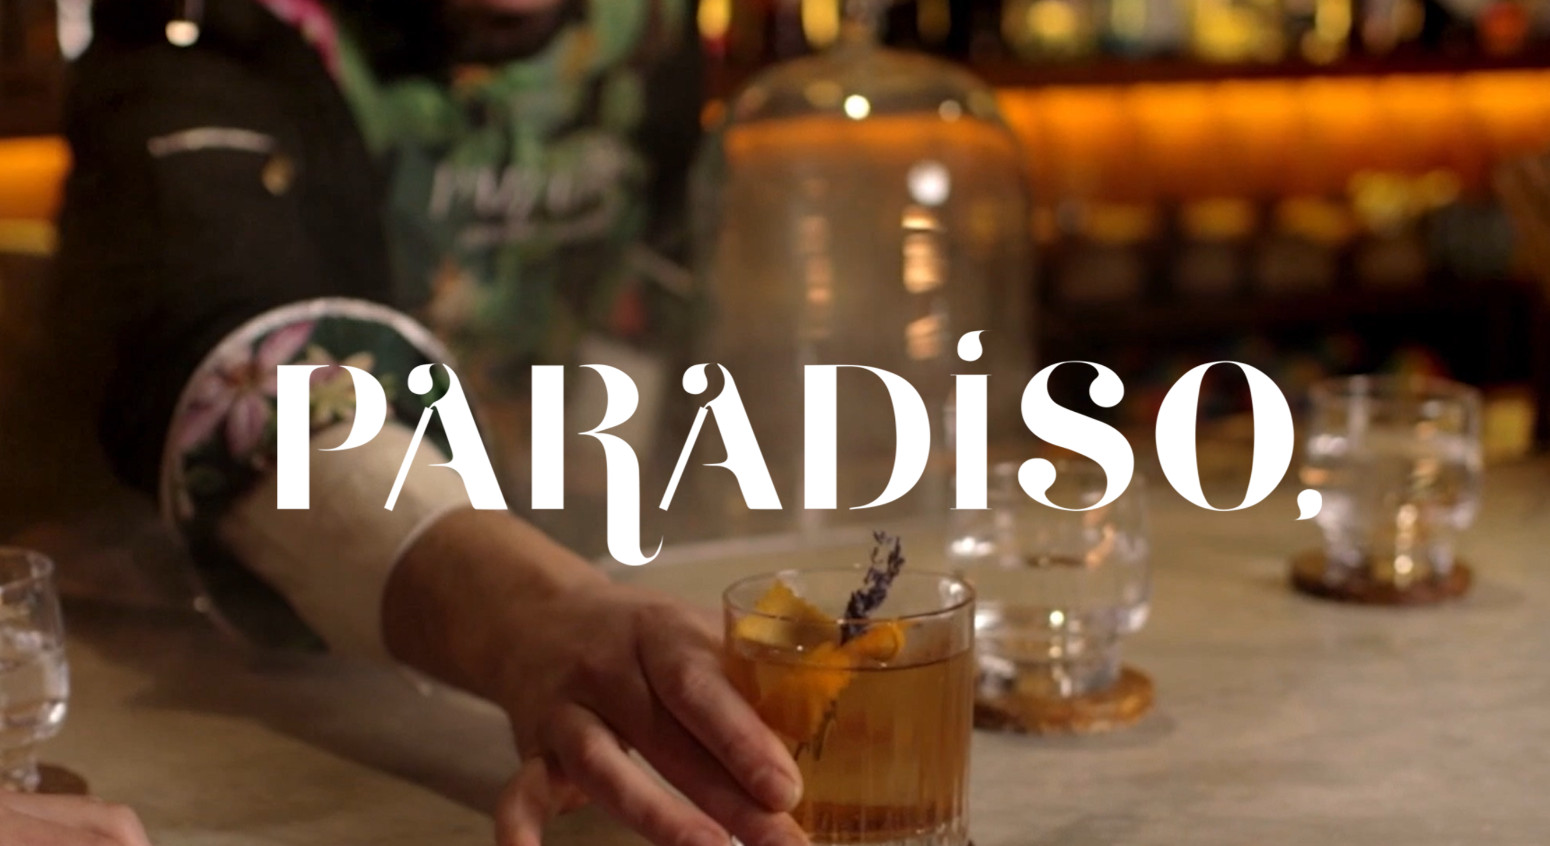  best bar websites example: Paradiso